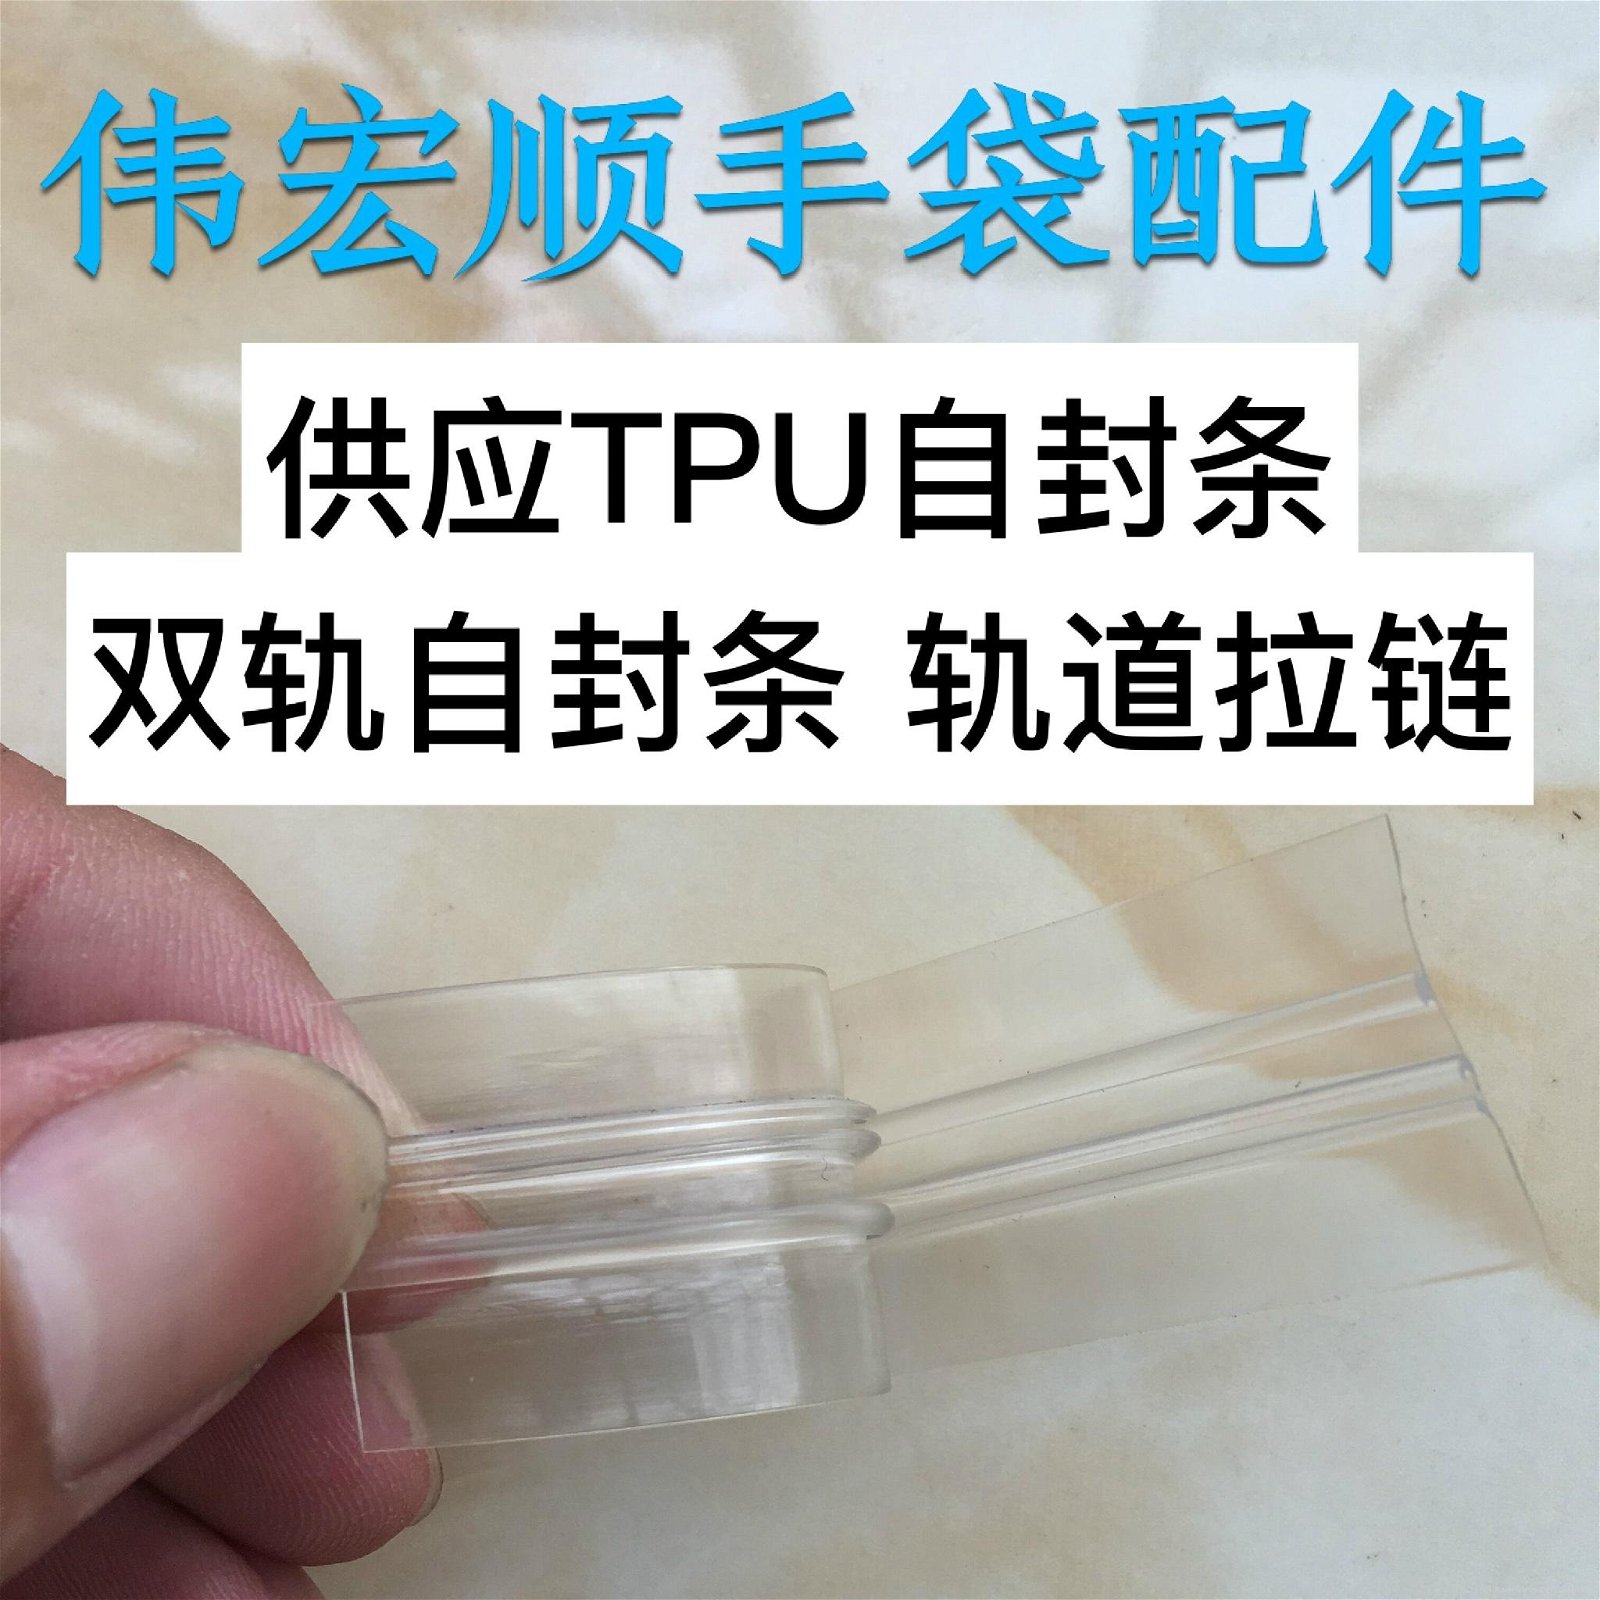 PVC zipper 4